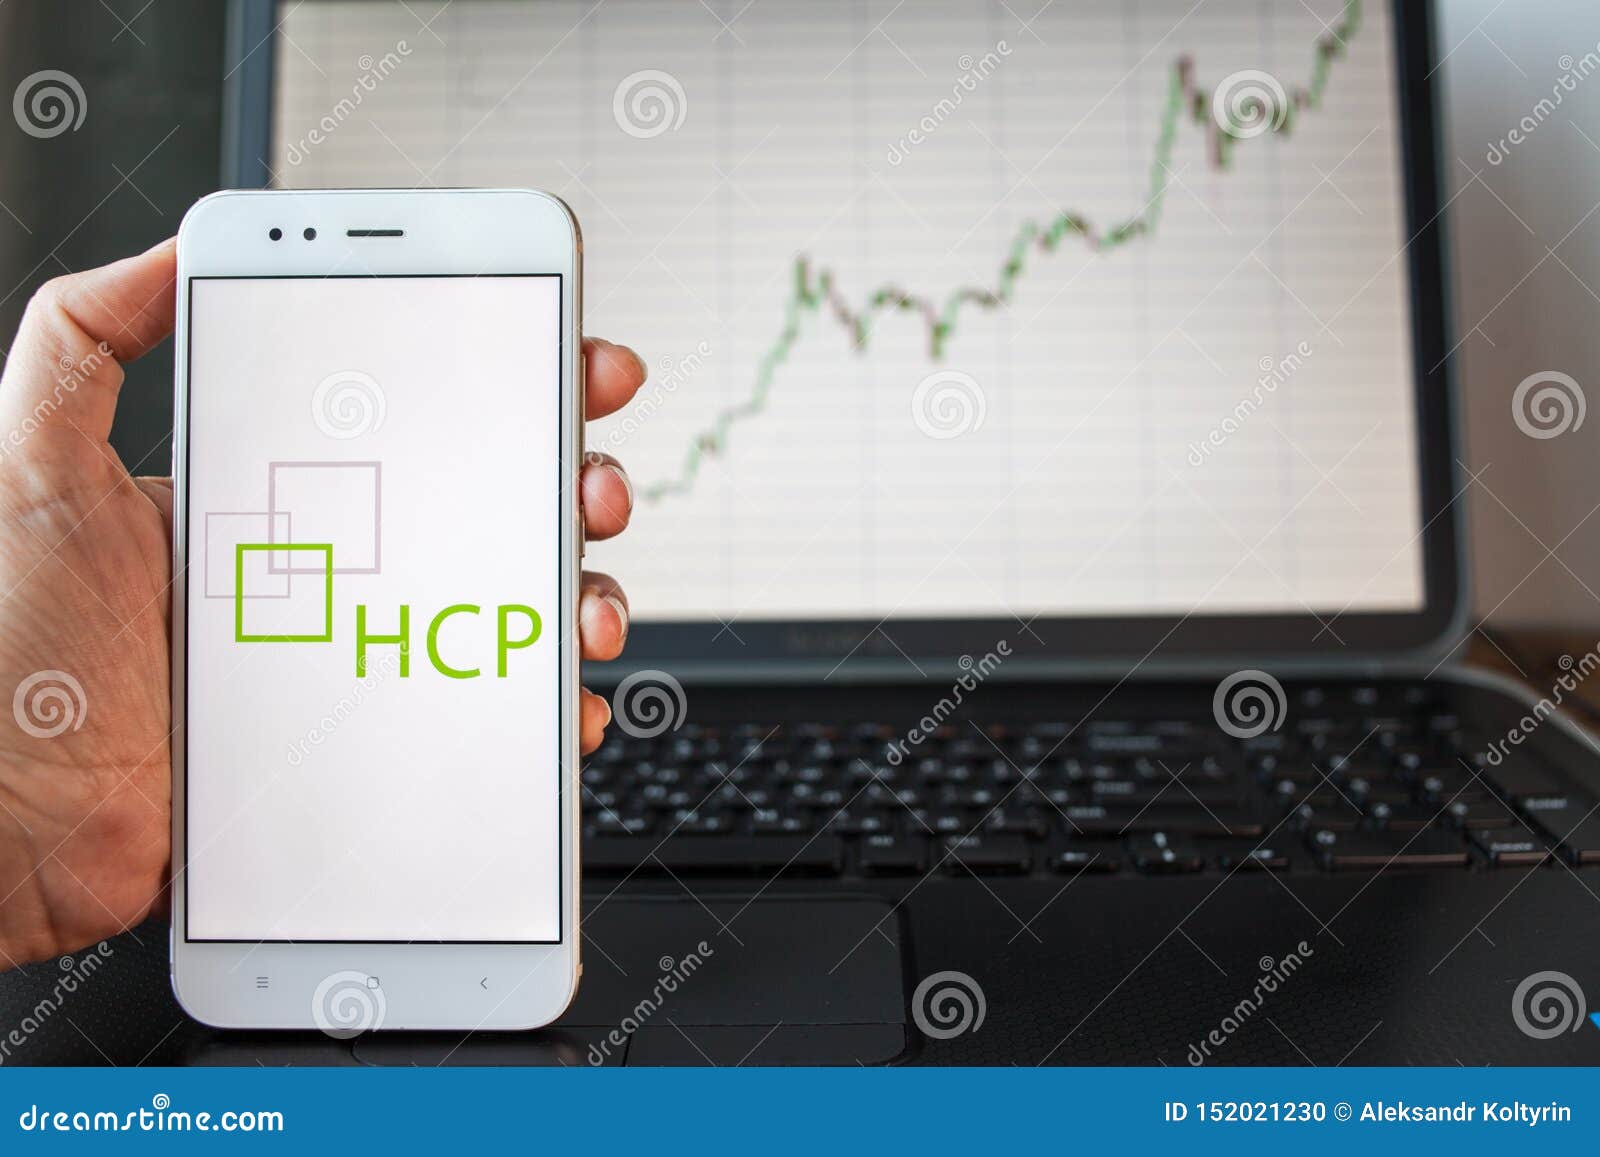 Hcp Stock Chart